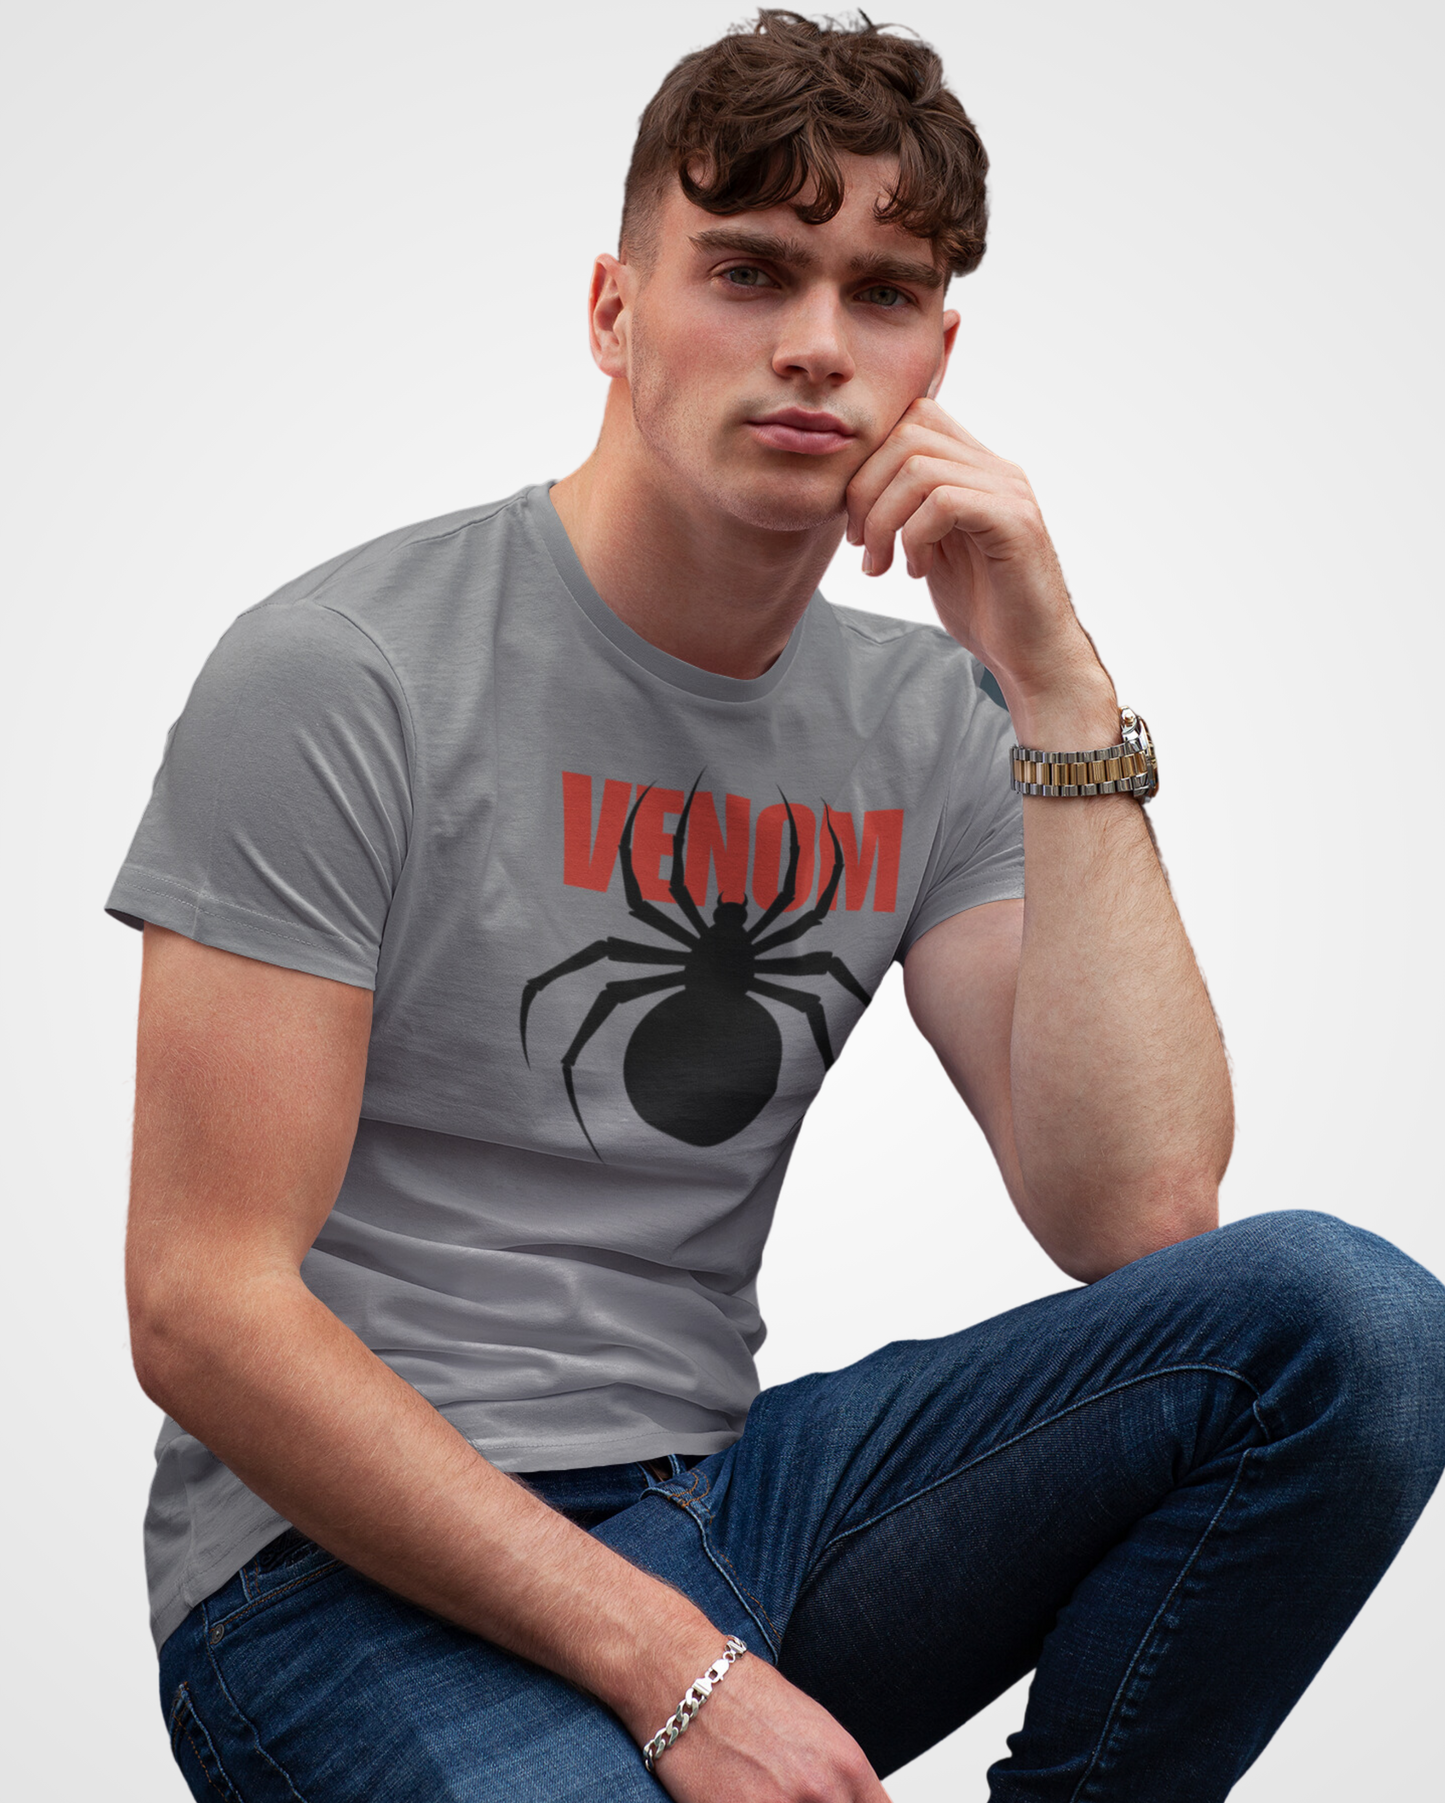 Men's Venom Spider Graphic Printed T-shirt - Lama Fashion